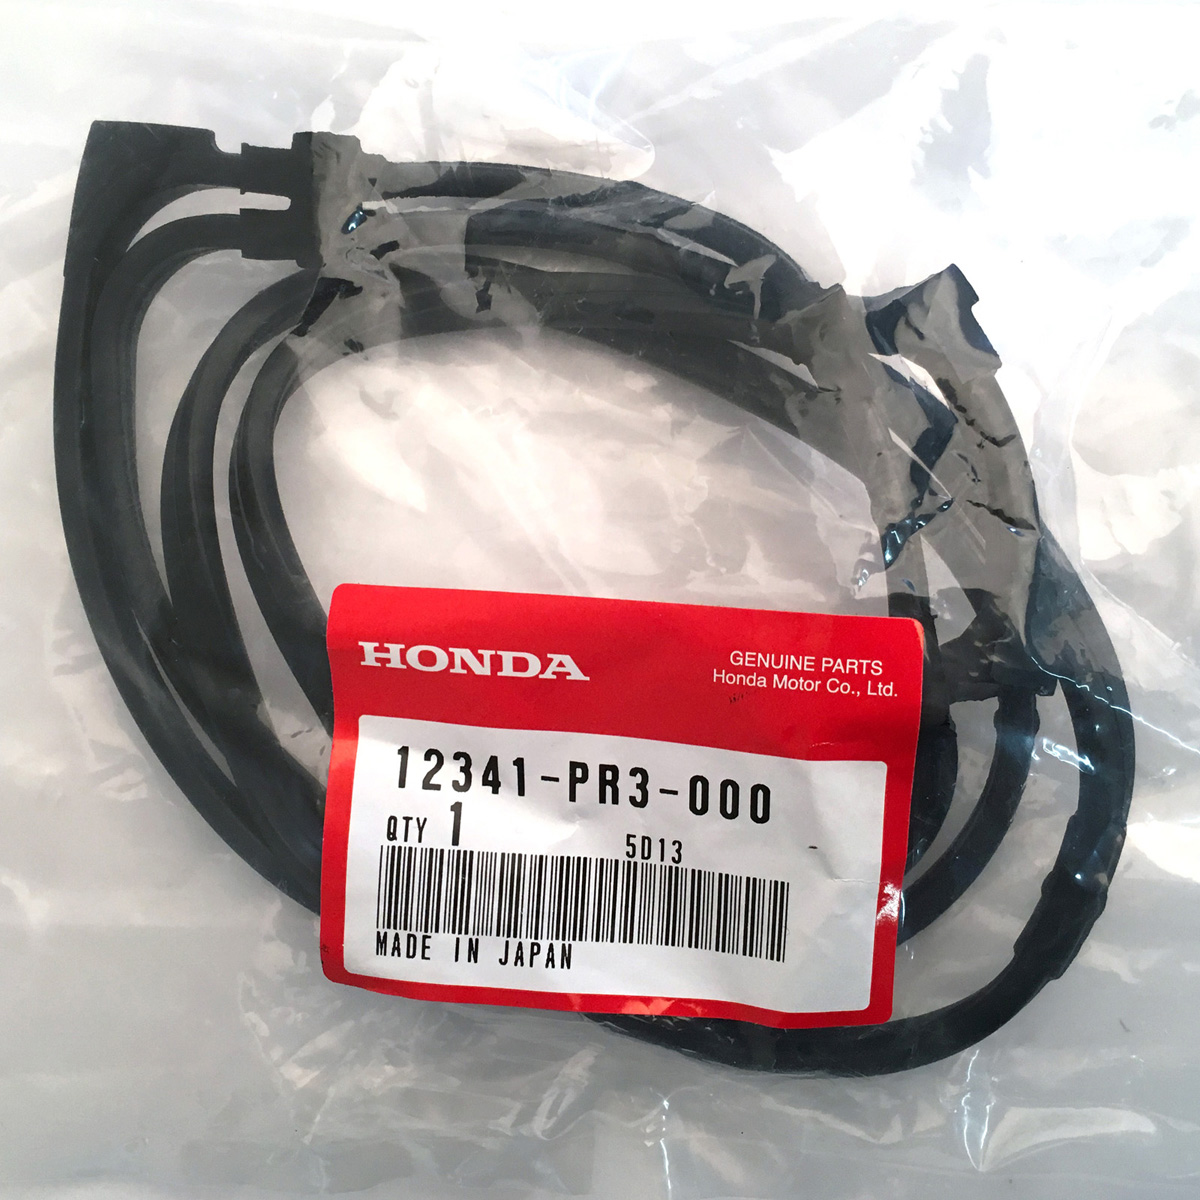 Honda Genuine OEM Honda Valve Cover Gasket B18 B16 B17 Made in Japan 12341-PR3-000